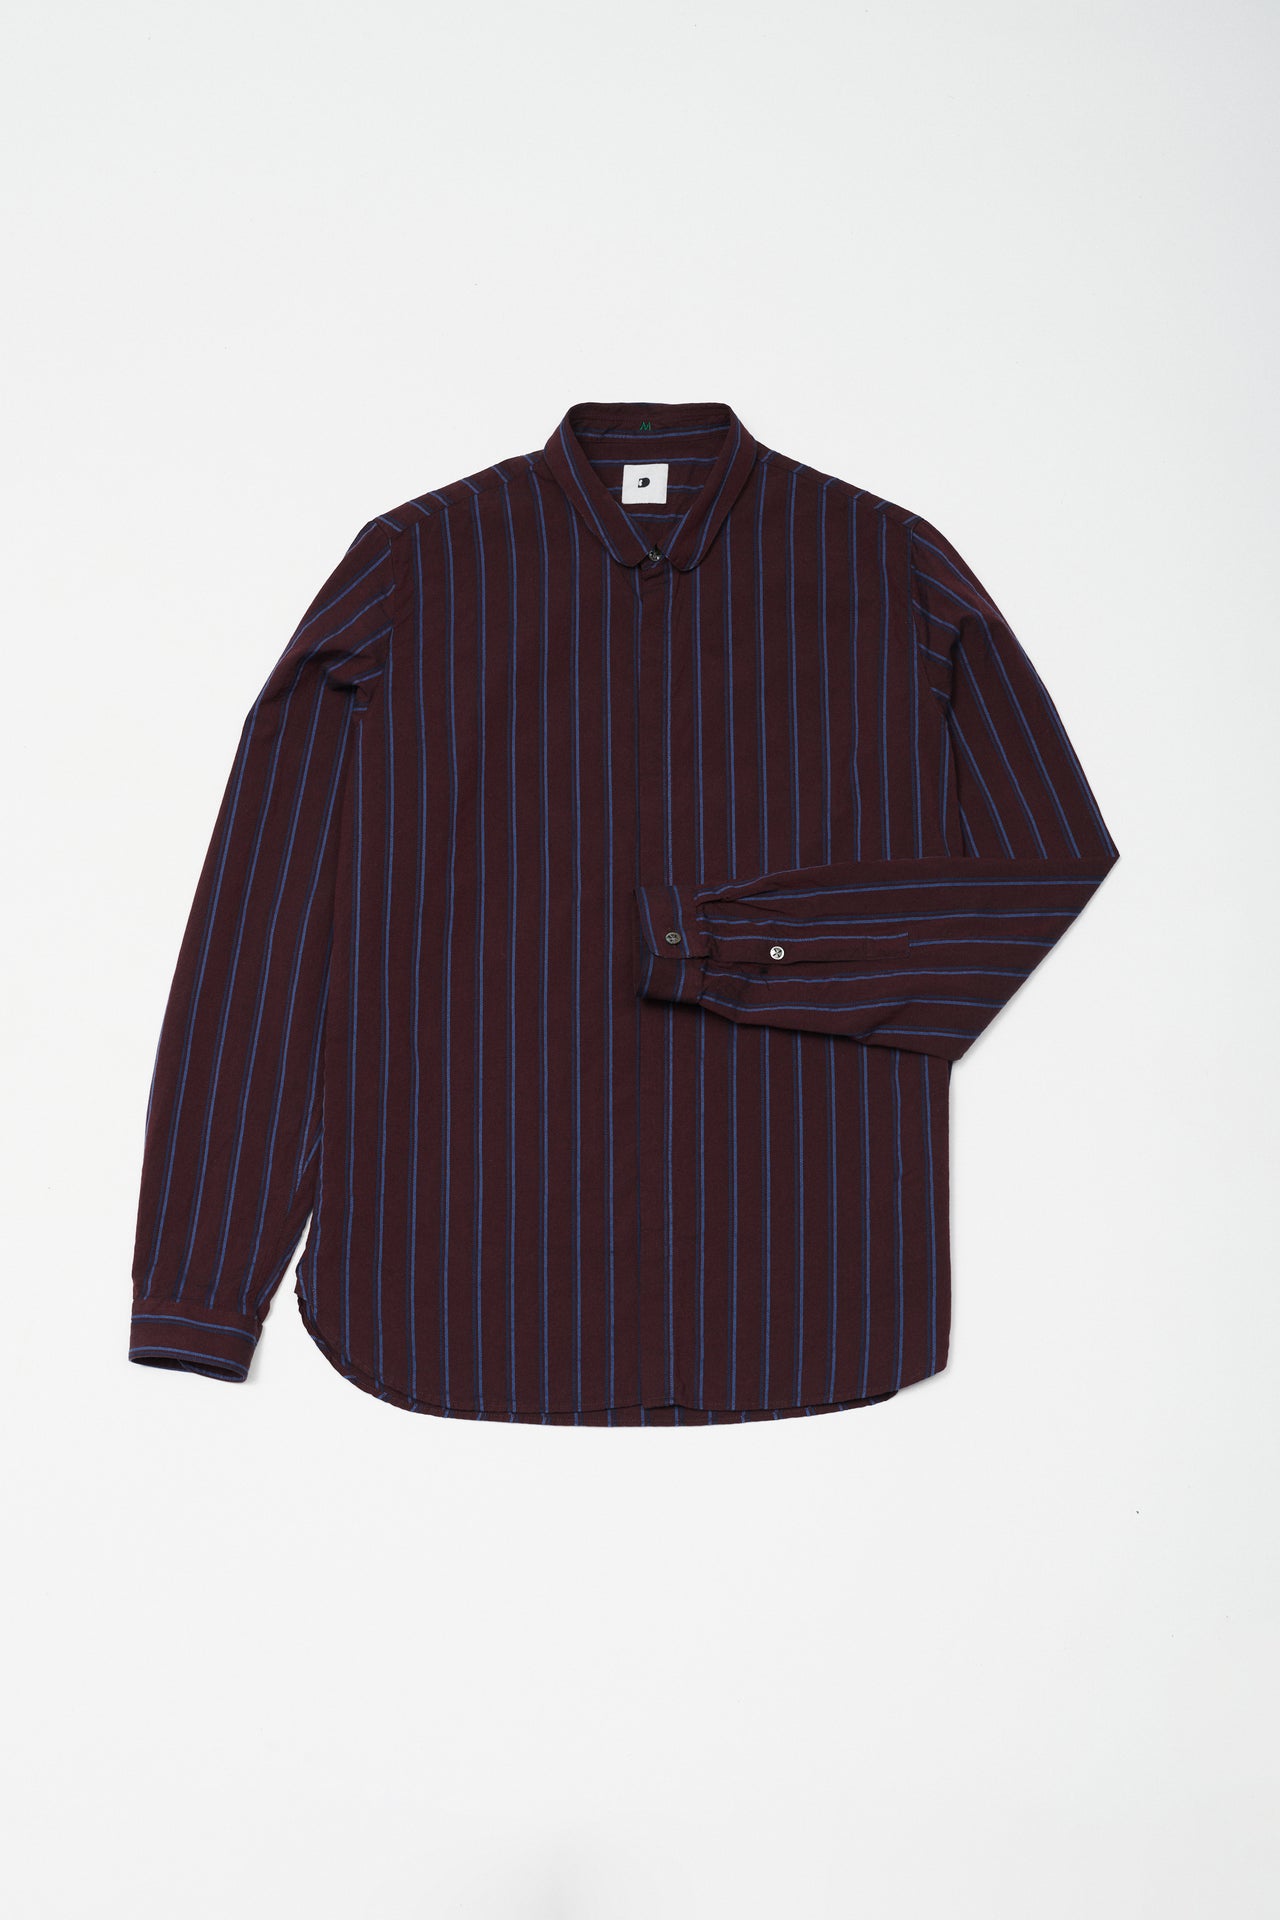 Cute Shirt in a Blue-Striped Burgundy Soft Italian Cotton